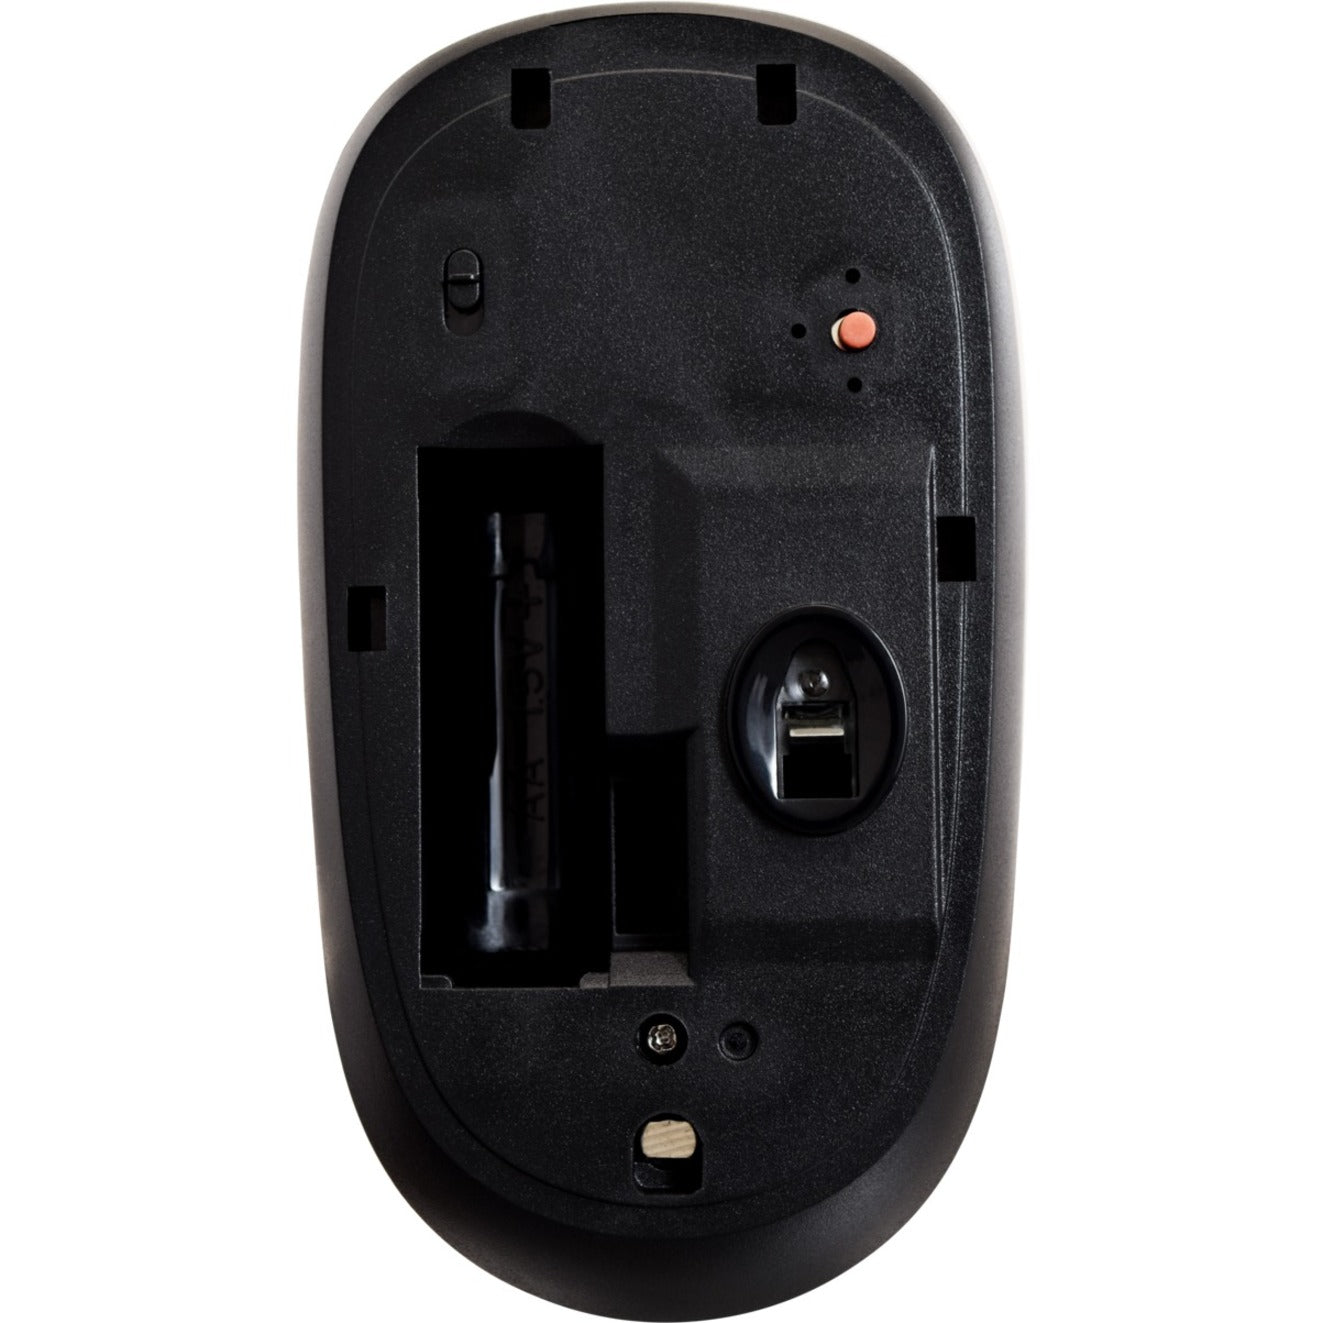 V7 MW550BT Bluetooth Silent 4-Button Mouse - Black, Ergonomic Fit, 1600 dpi, 2.4 GHz Wireless